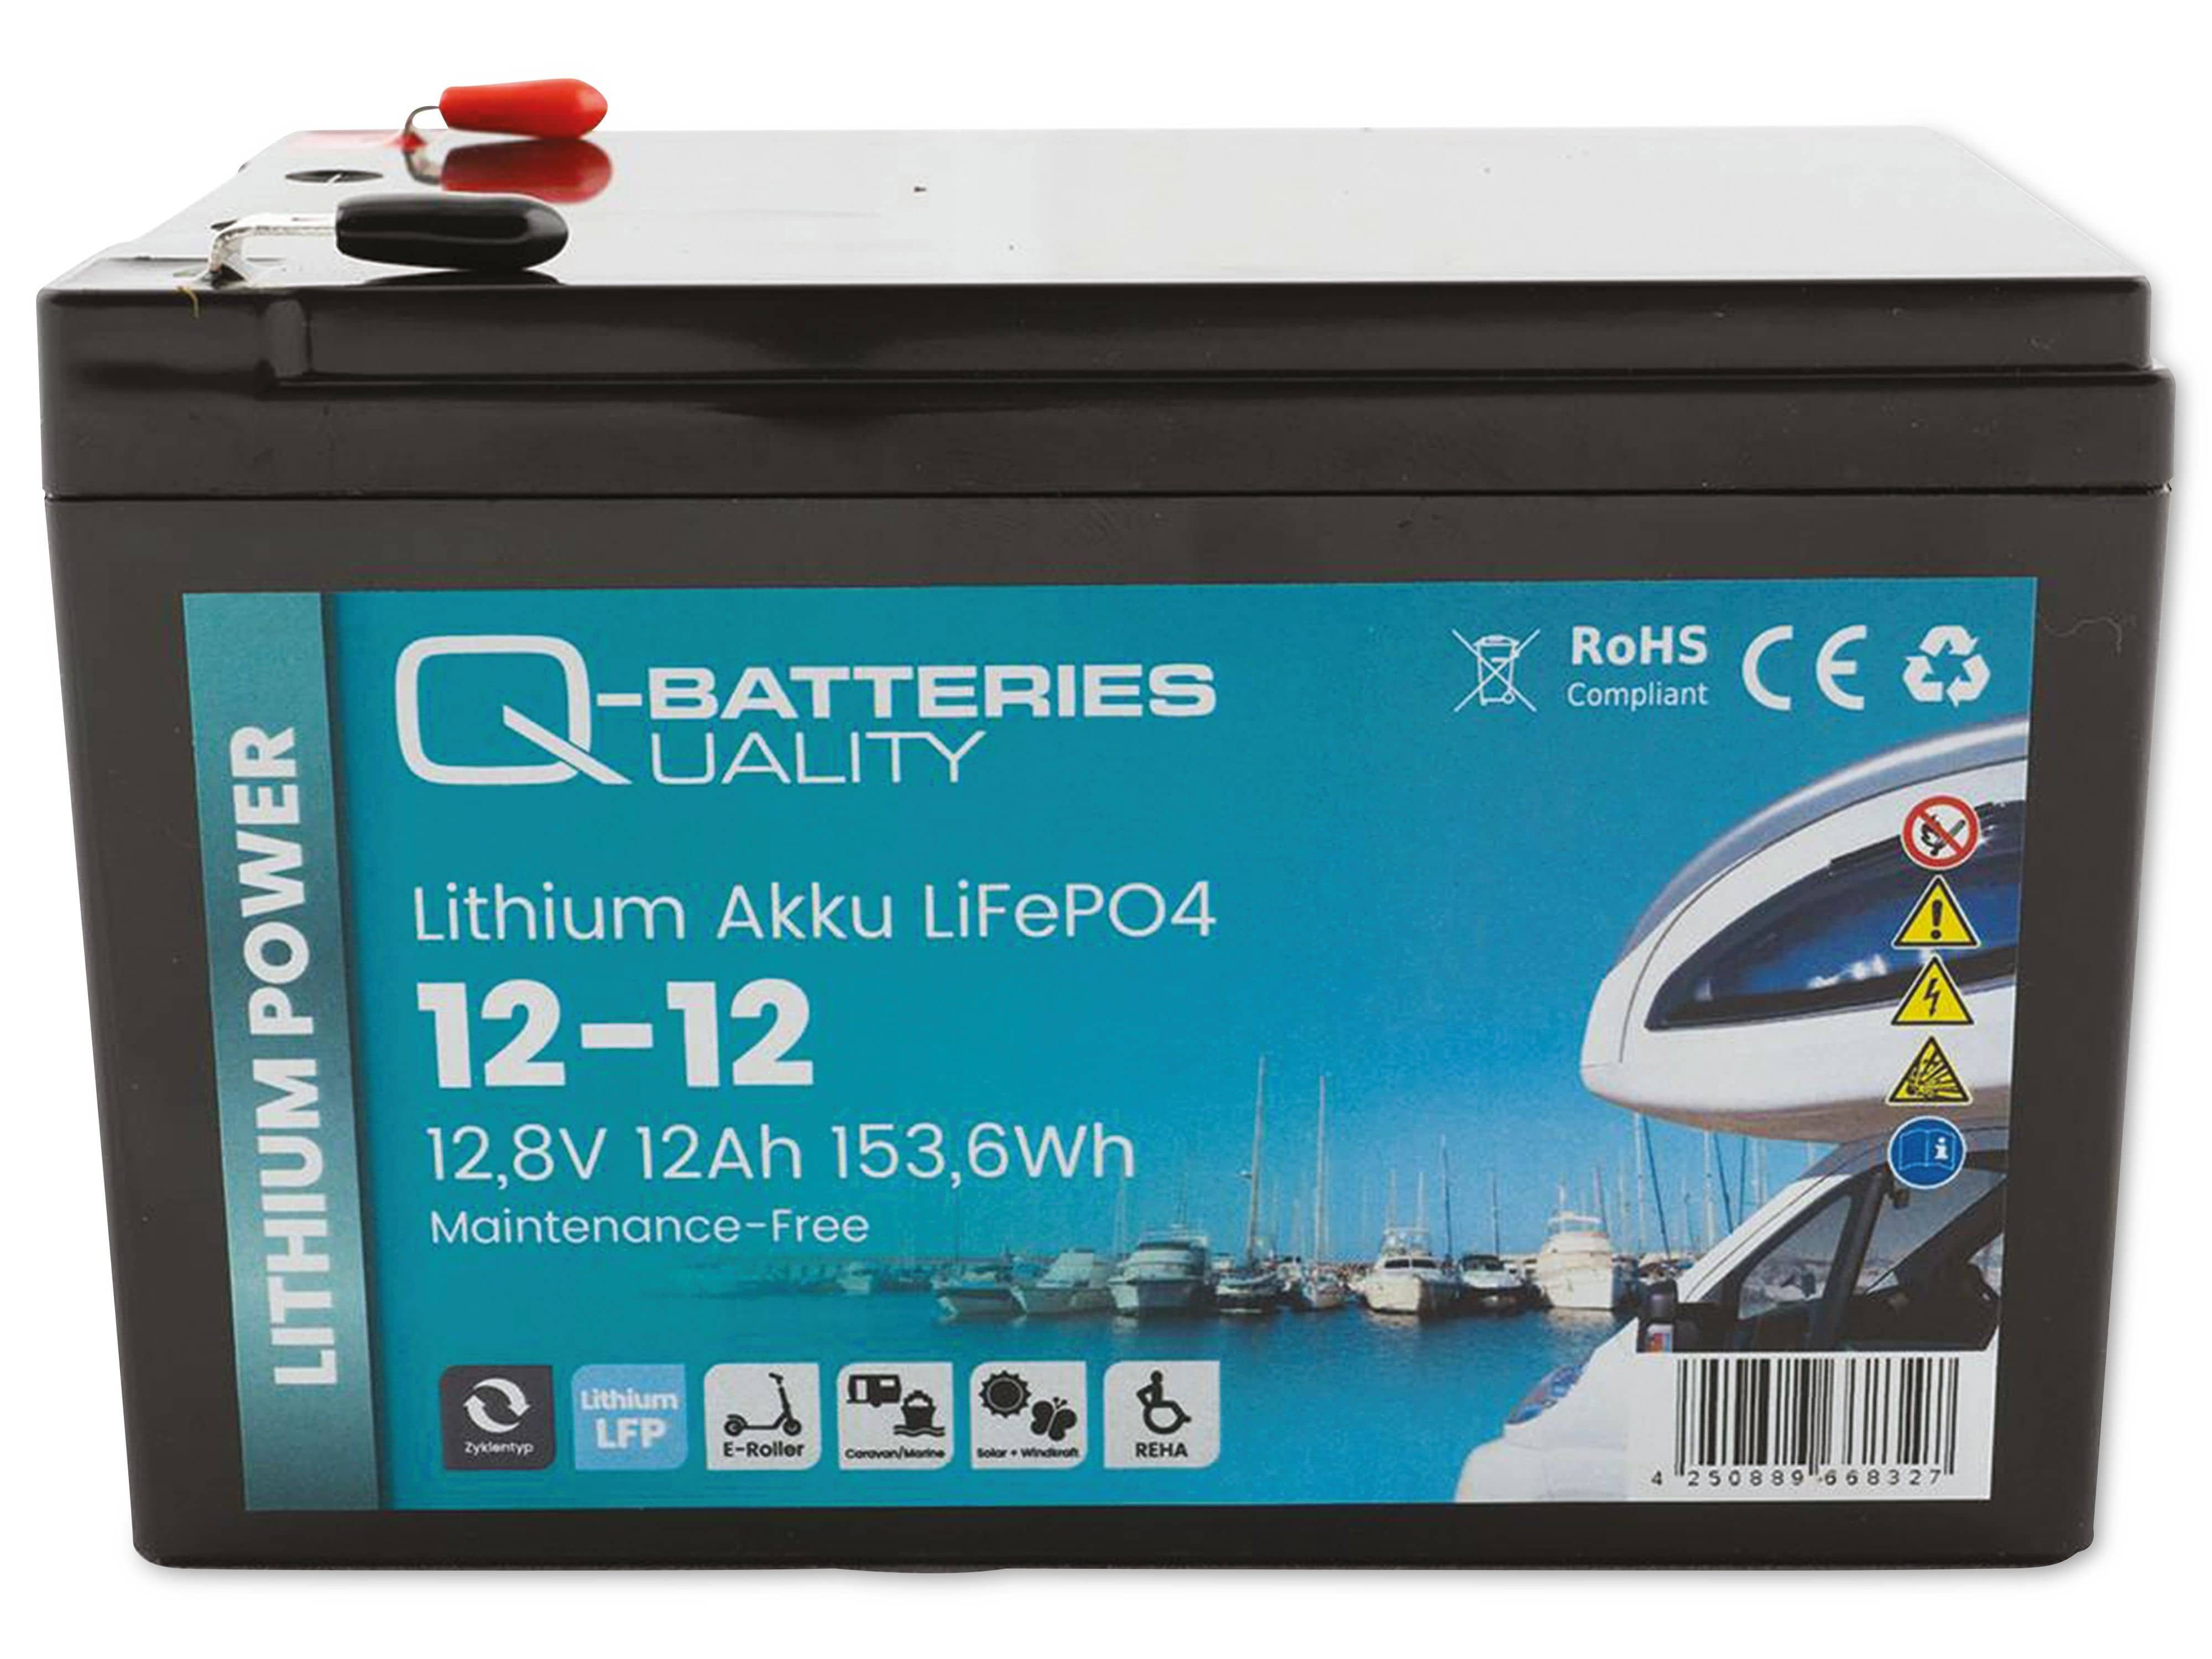 12Ah 12,8V, Q-Batteries Akku Q-BATTERIES Batterie 12-12 Lithium